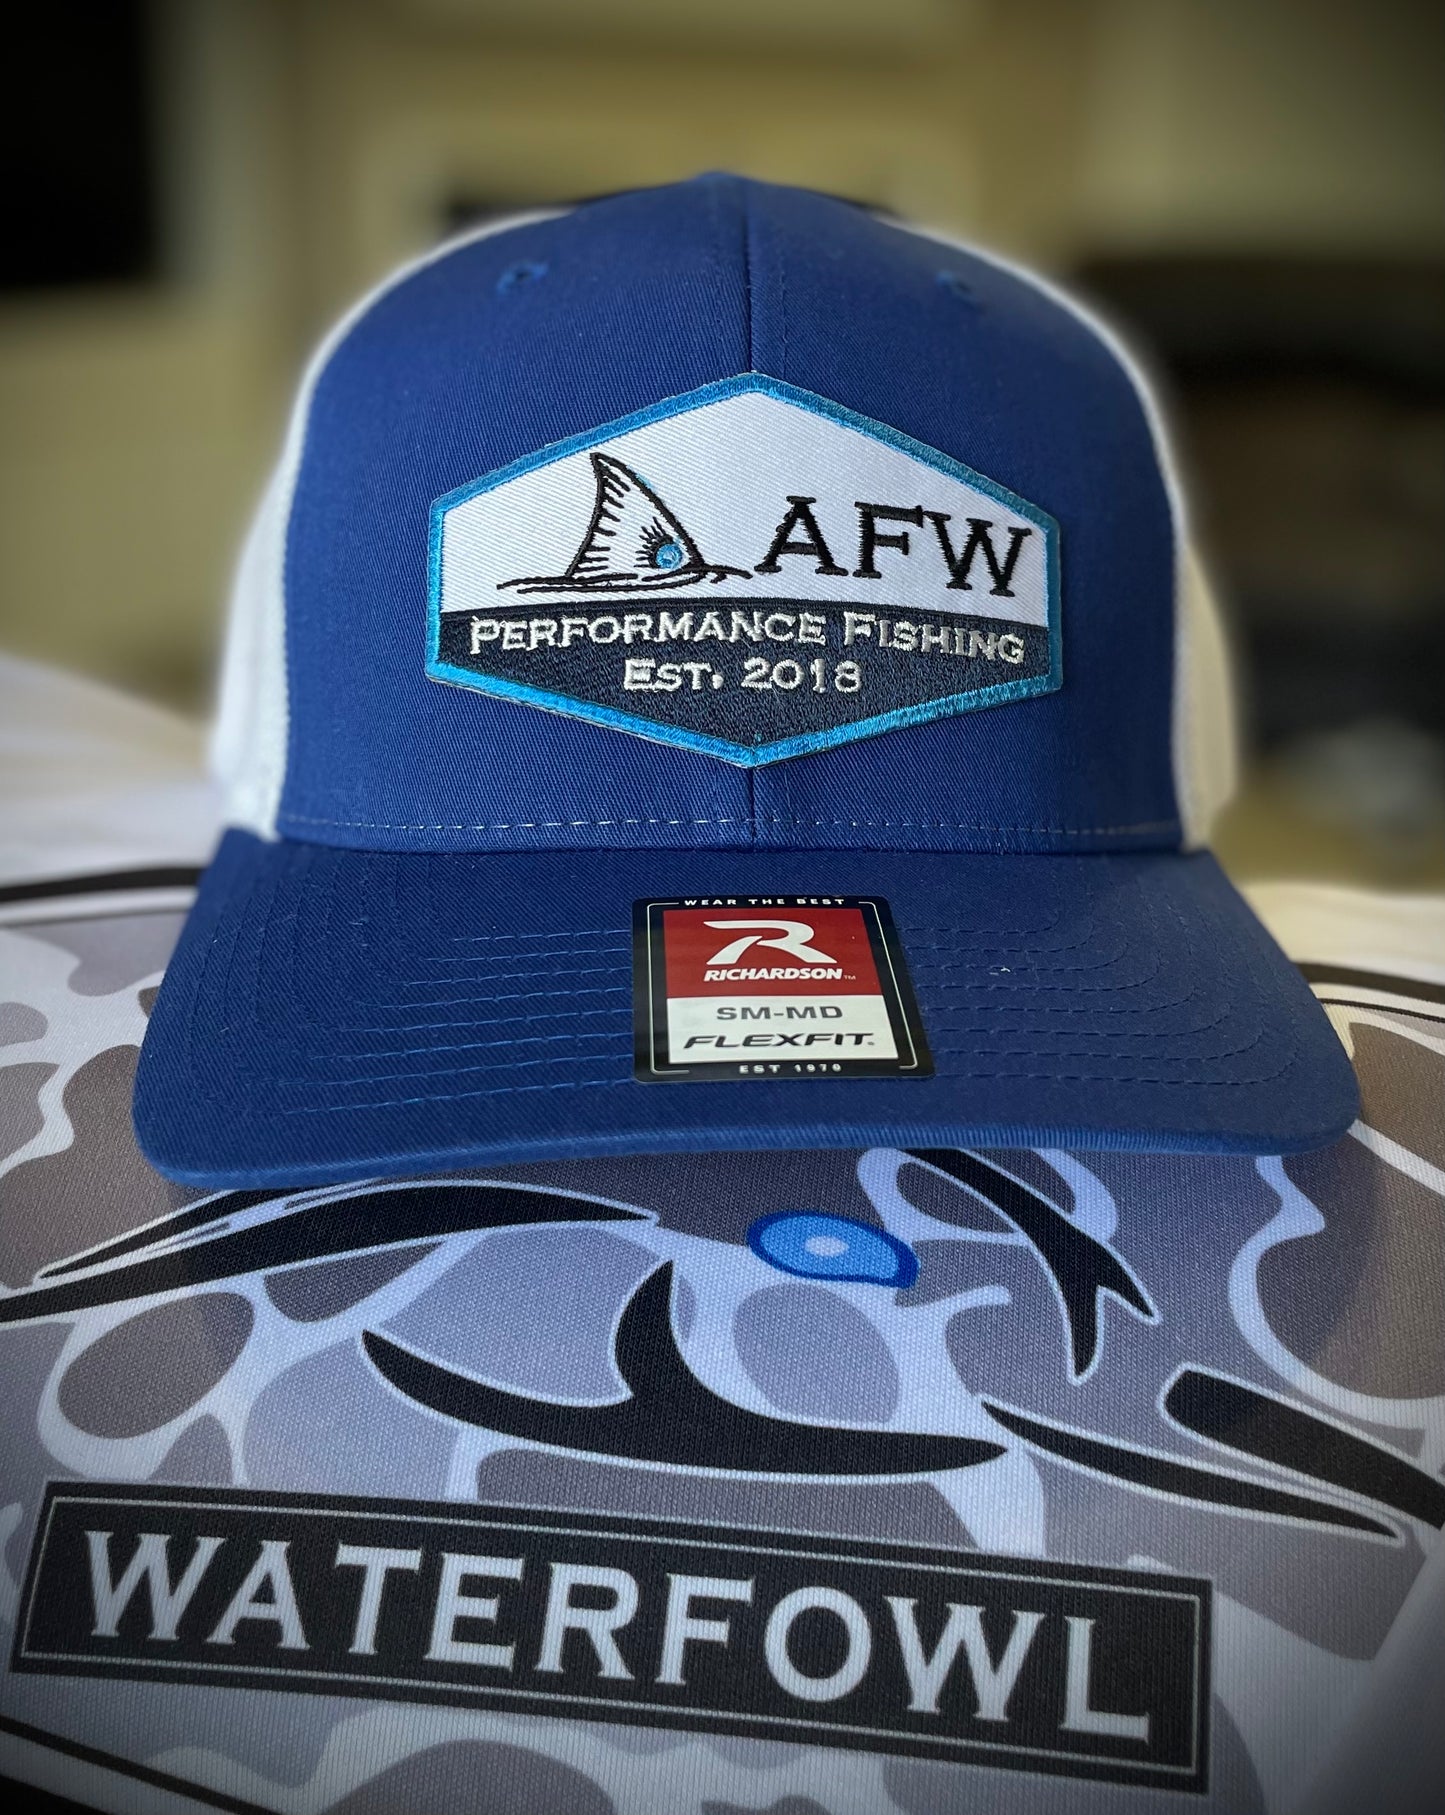 AFW Fishing Patch Hat - Royal - White Flextfit